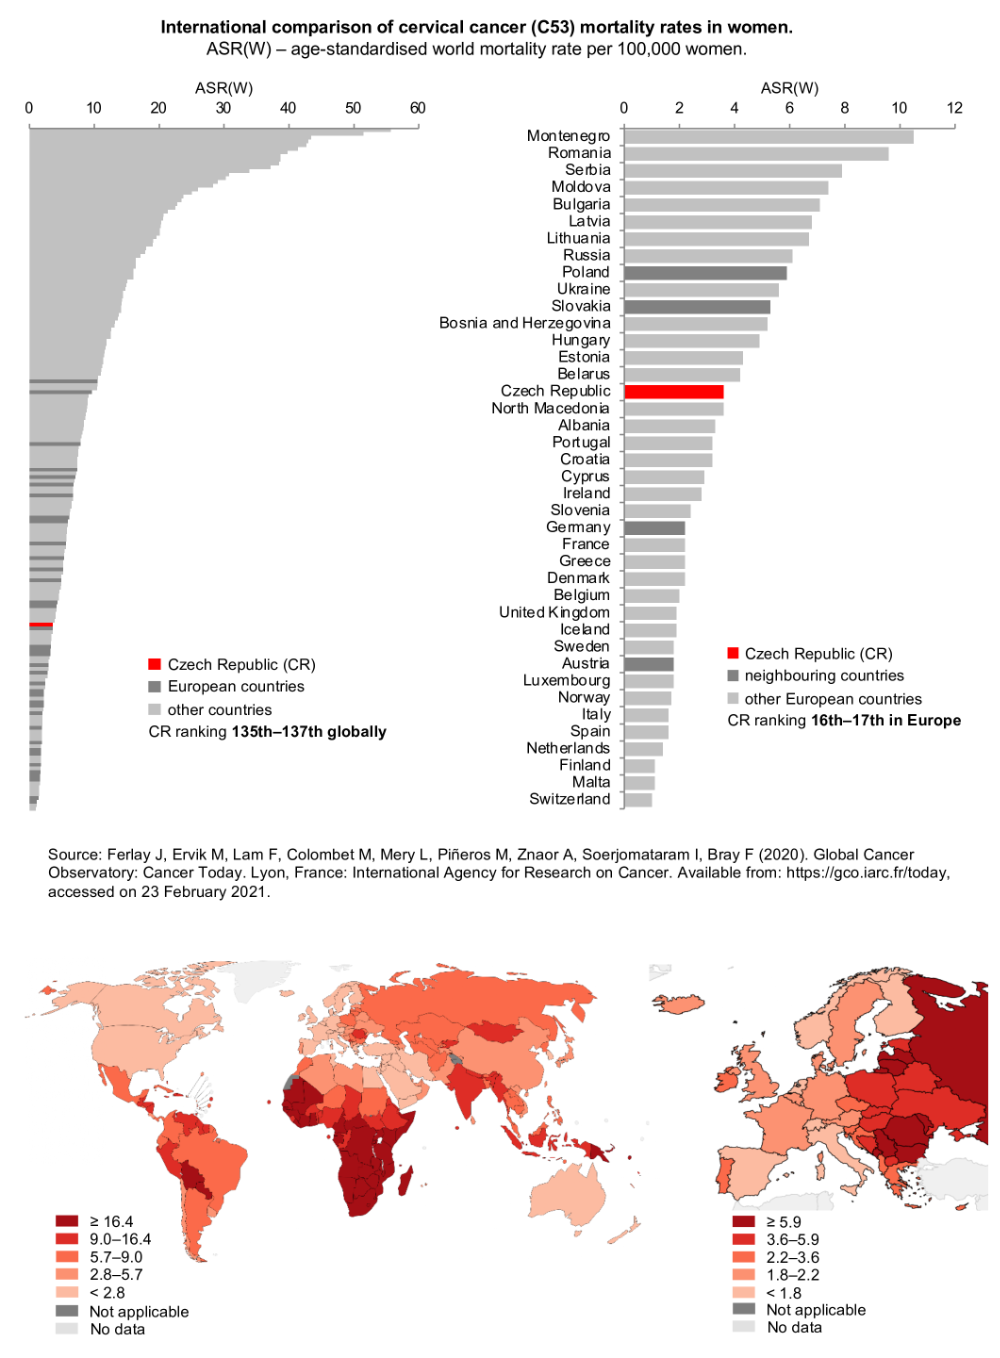 Figure 2: International comparison of cervical cancer (C53) mortality rates. ASR(W) – age-standardised world mortality rate per 100,000 women. Source: GLOBOCAN 2020 [1].